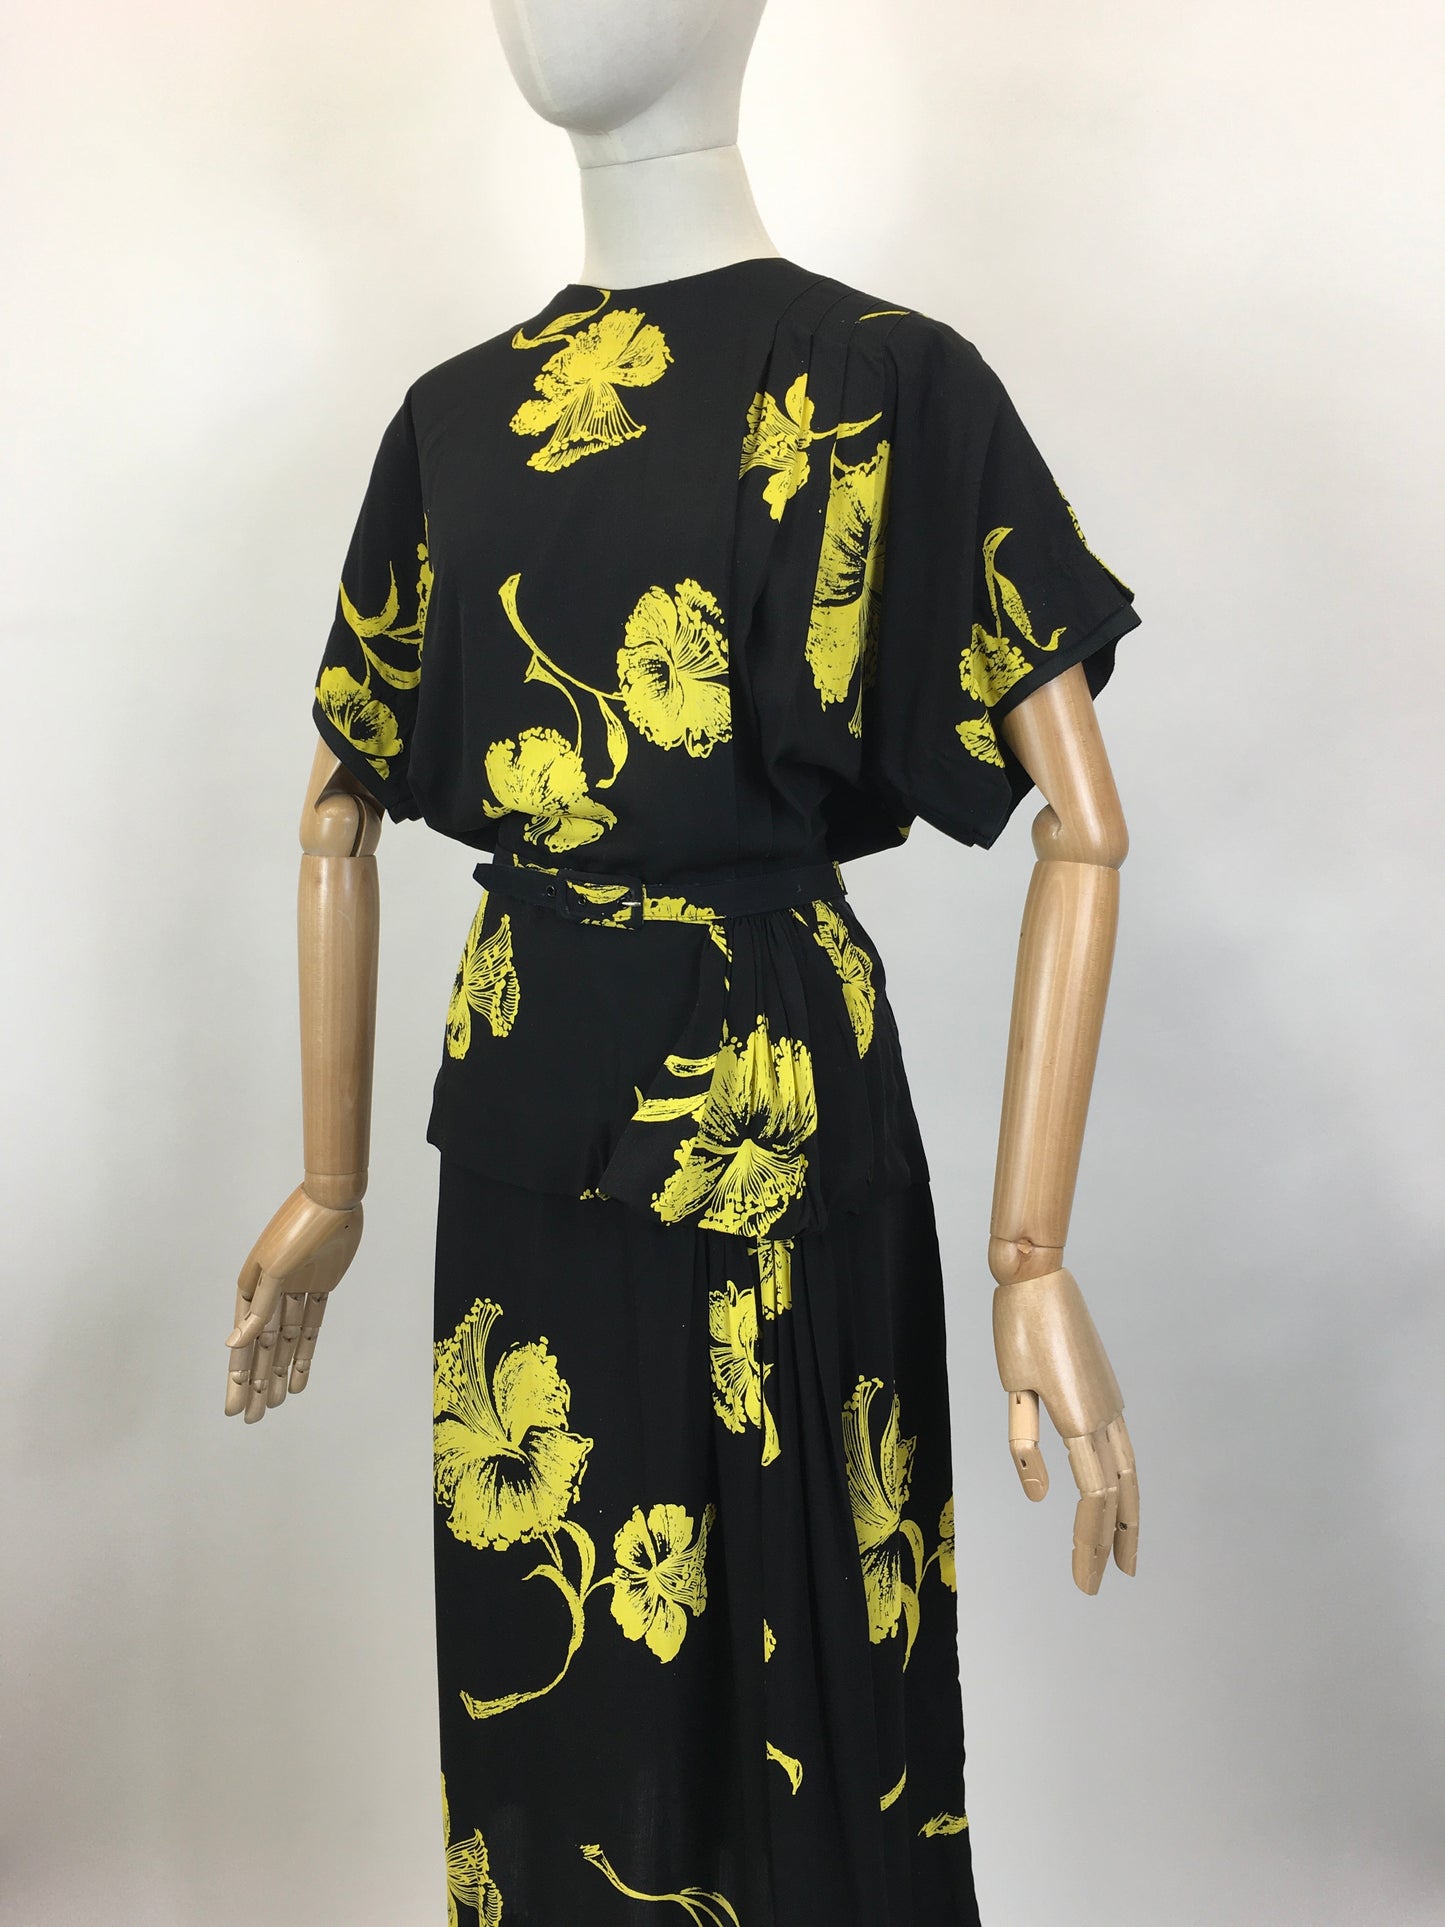 Original 1940’s Sensational Black & Yellow Dress by ‘ Paul Sachs ‘ - With Stunning Hip Swag & Peplum Details